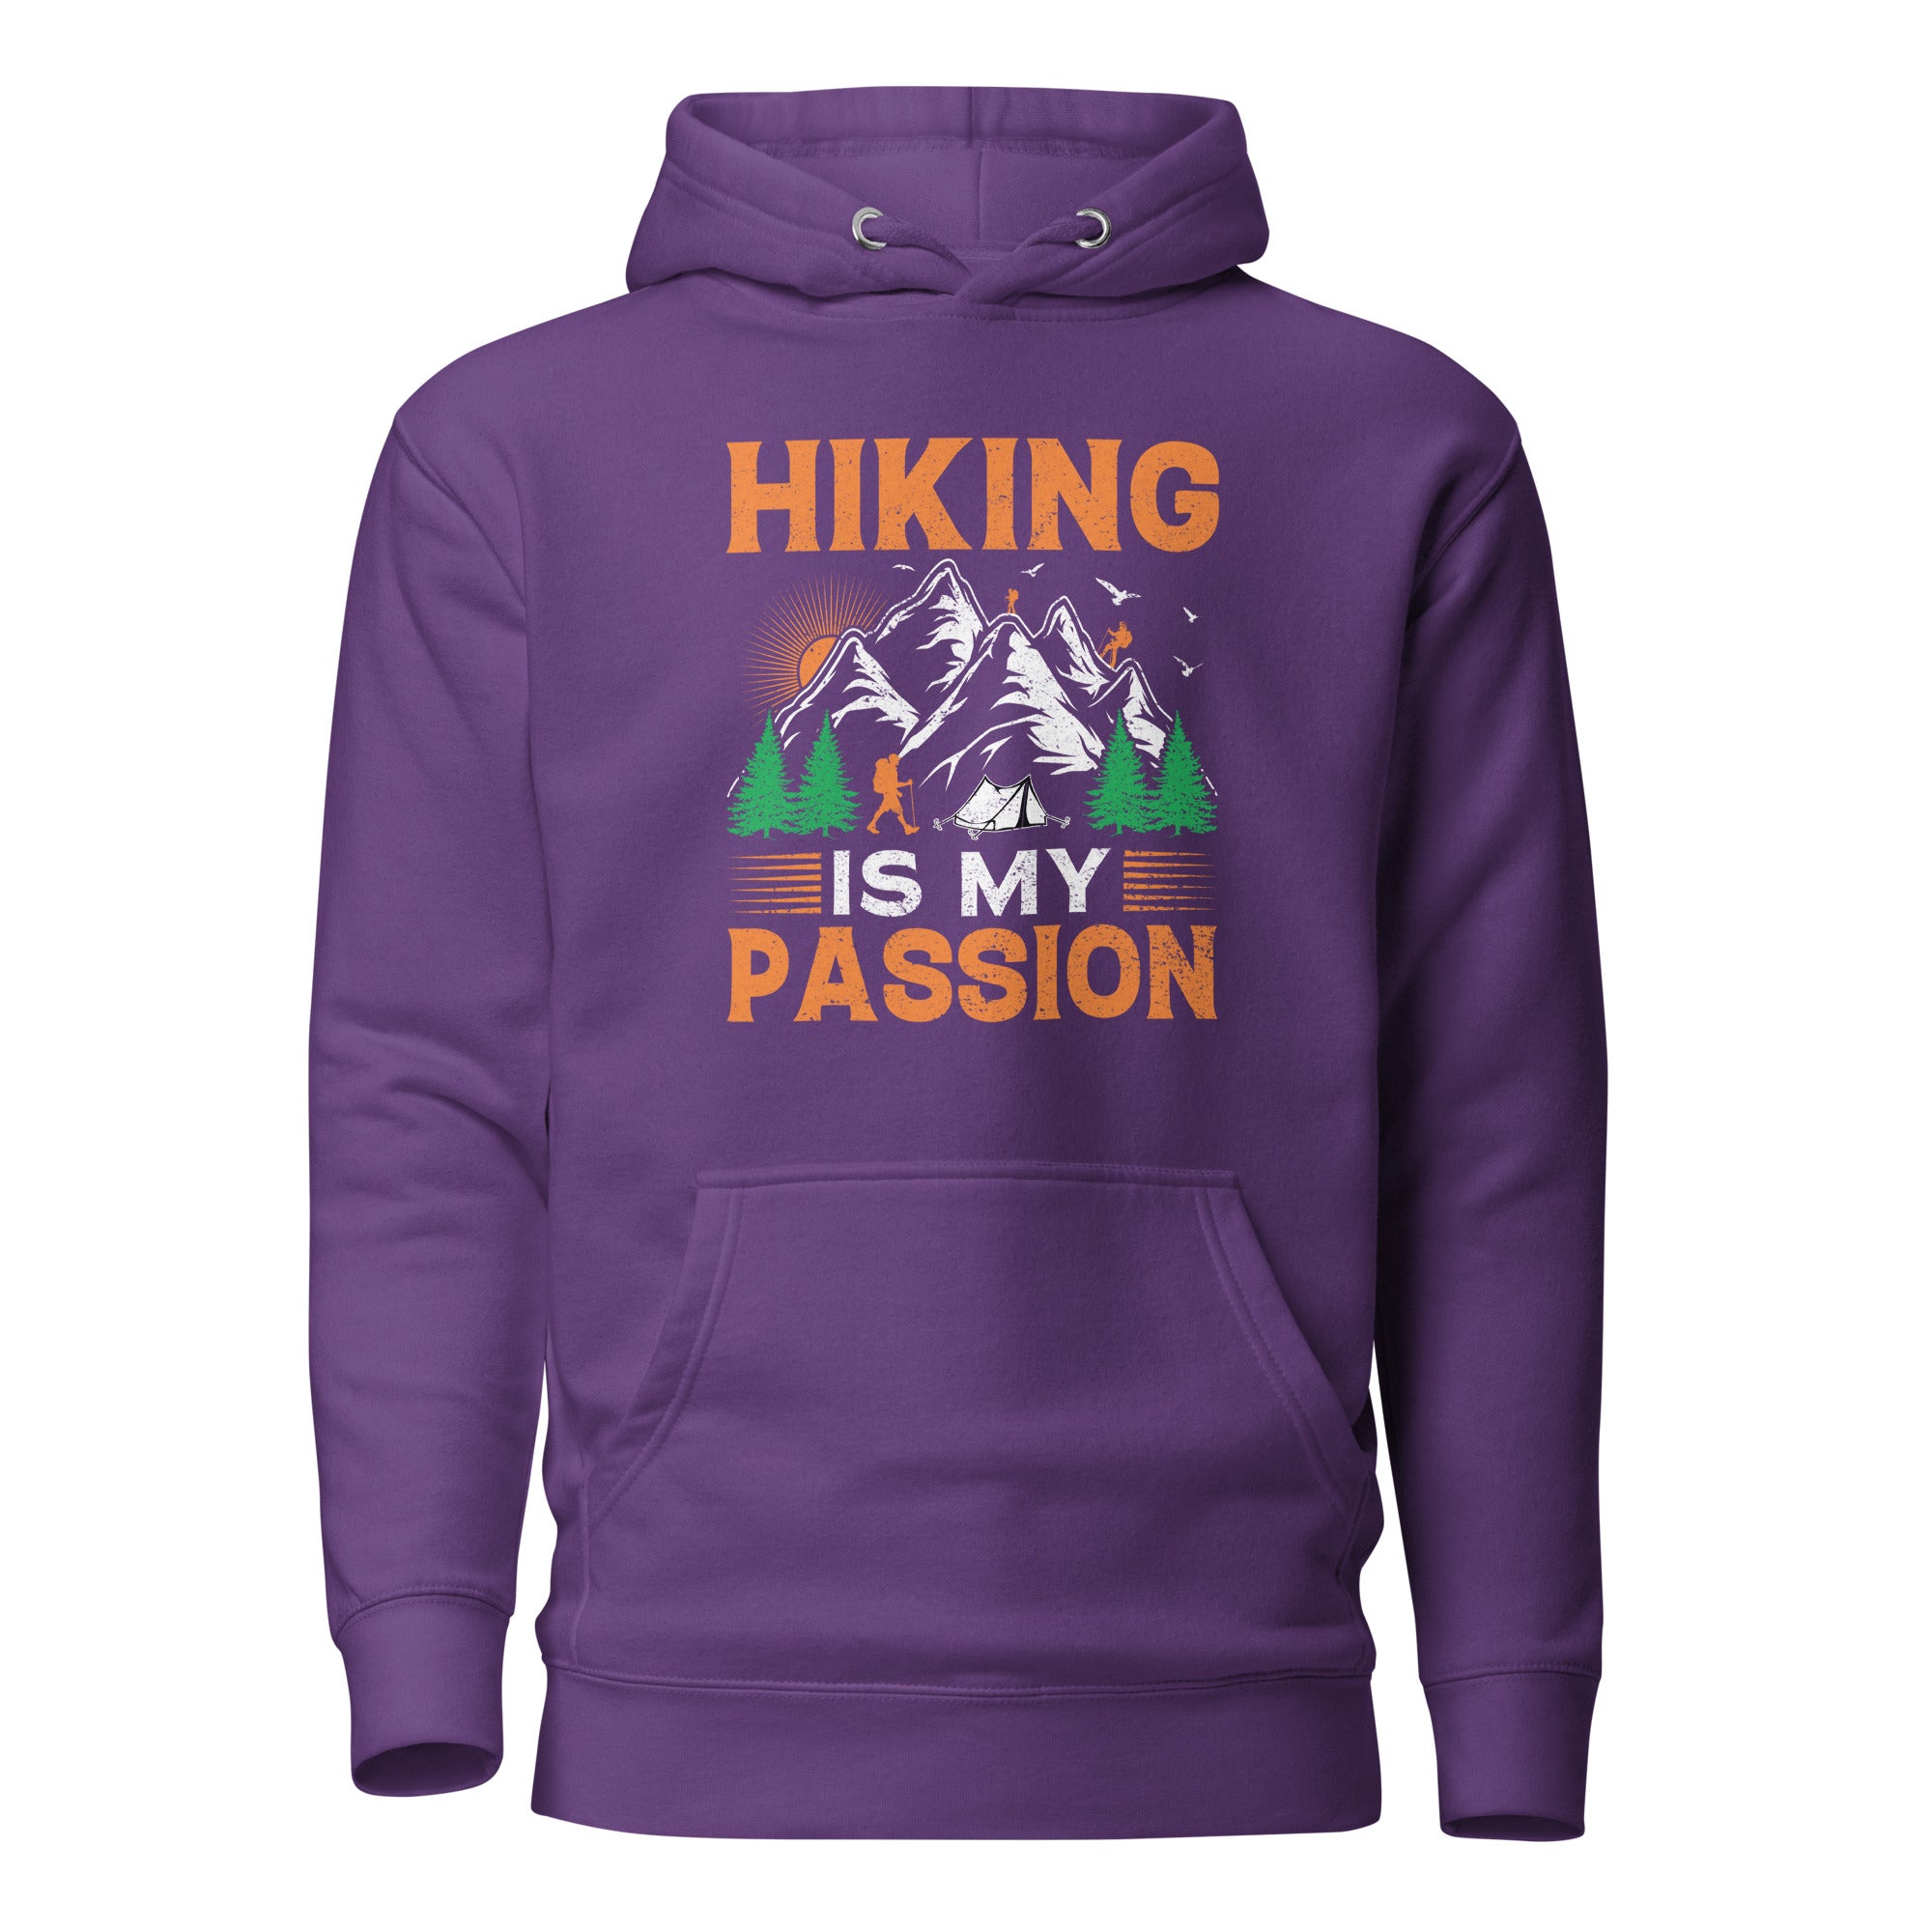 Hiking Is My Passion - Hoodie